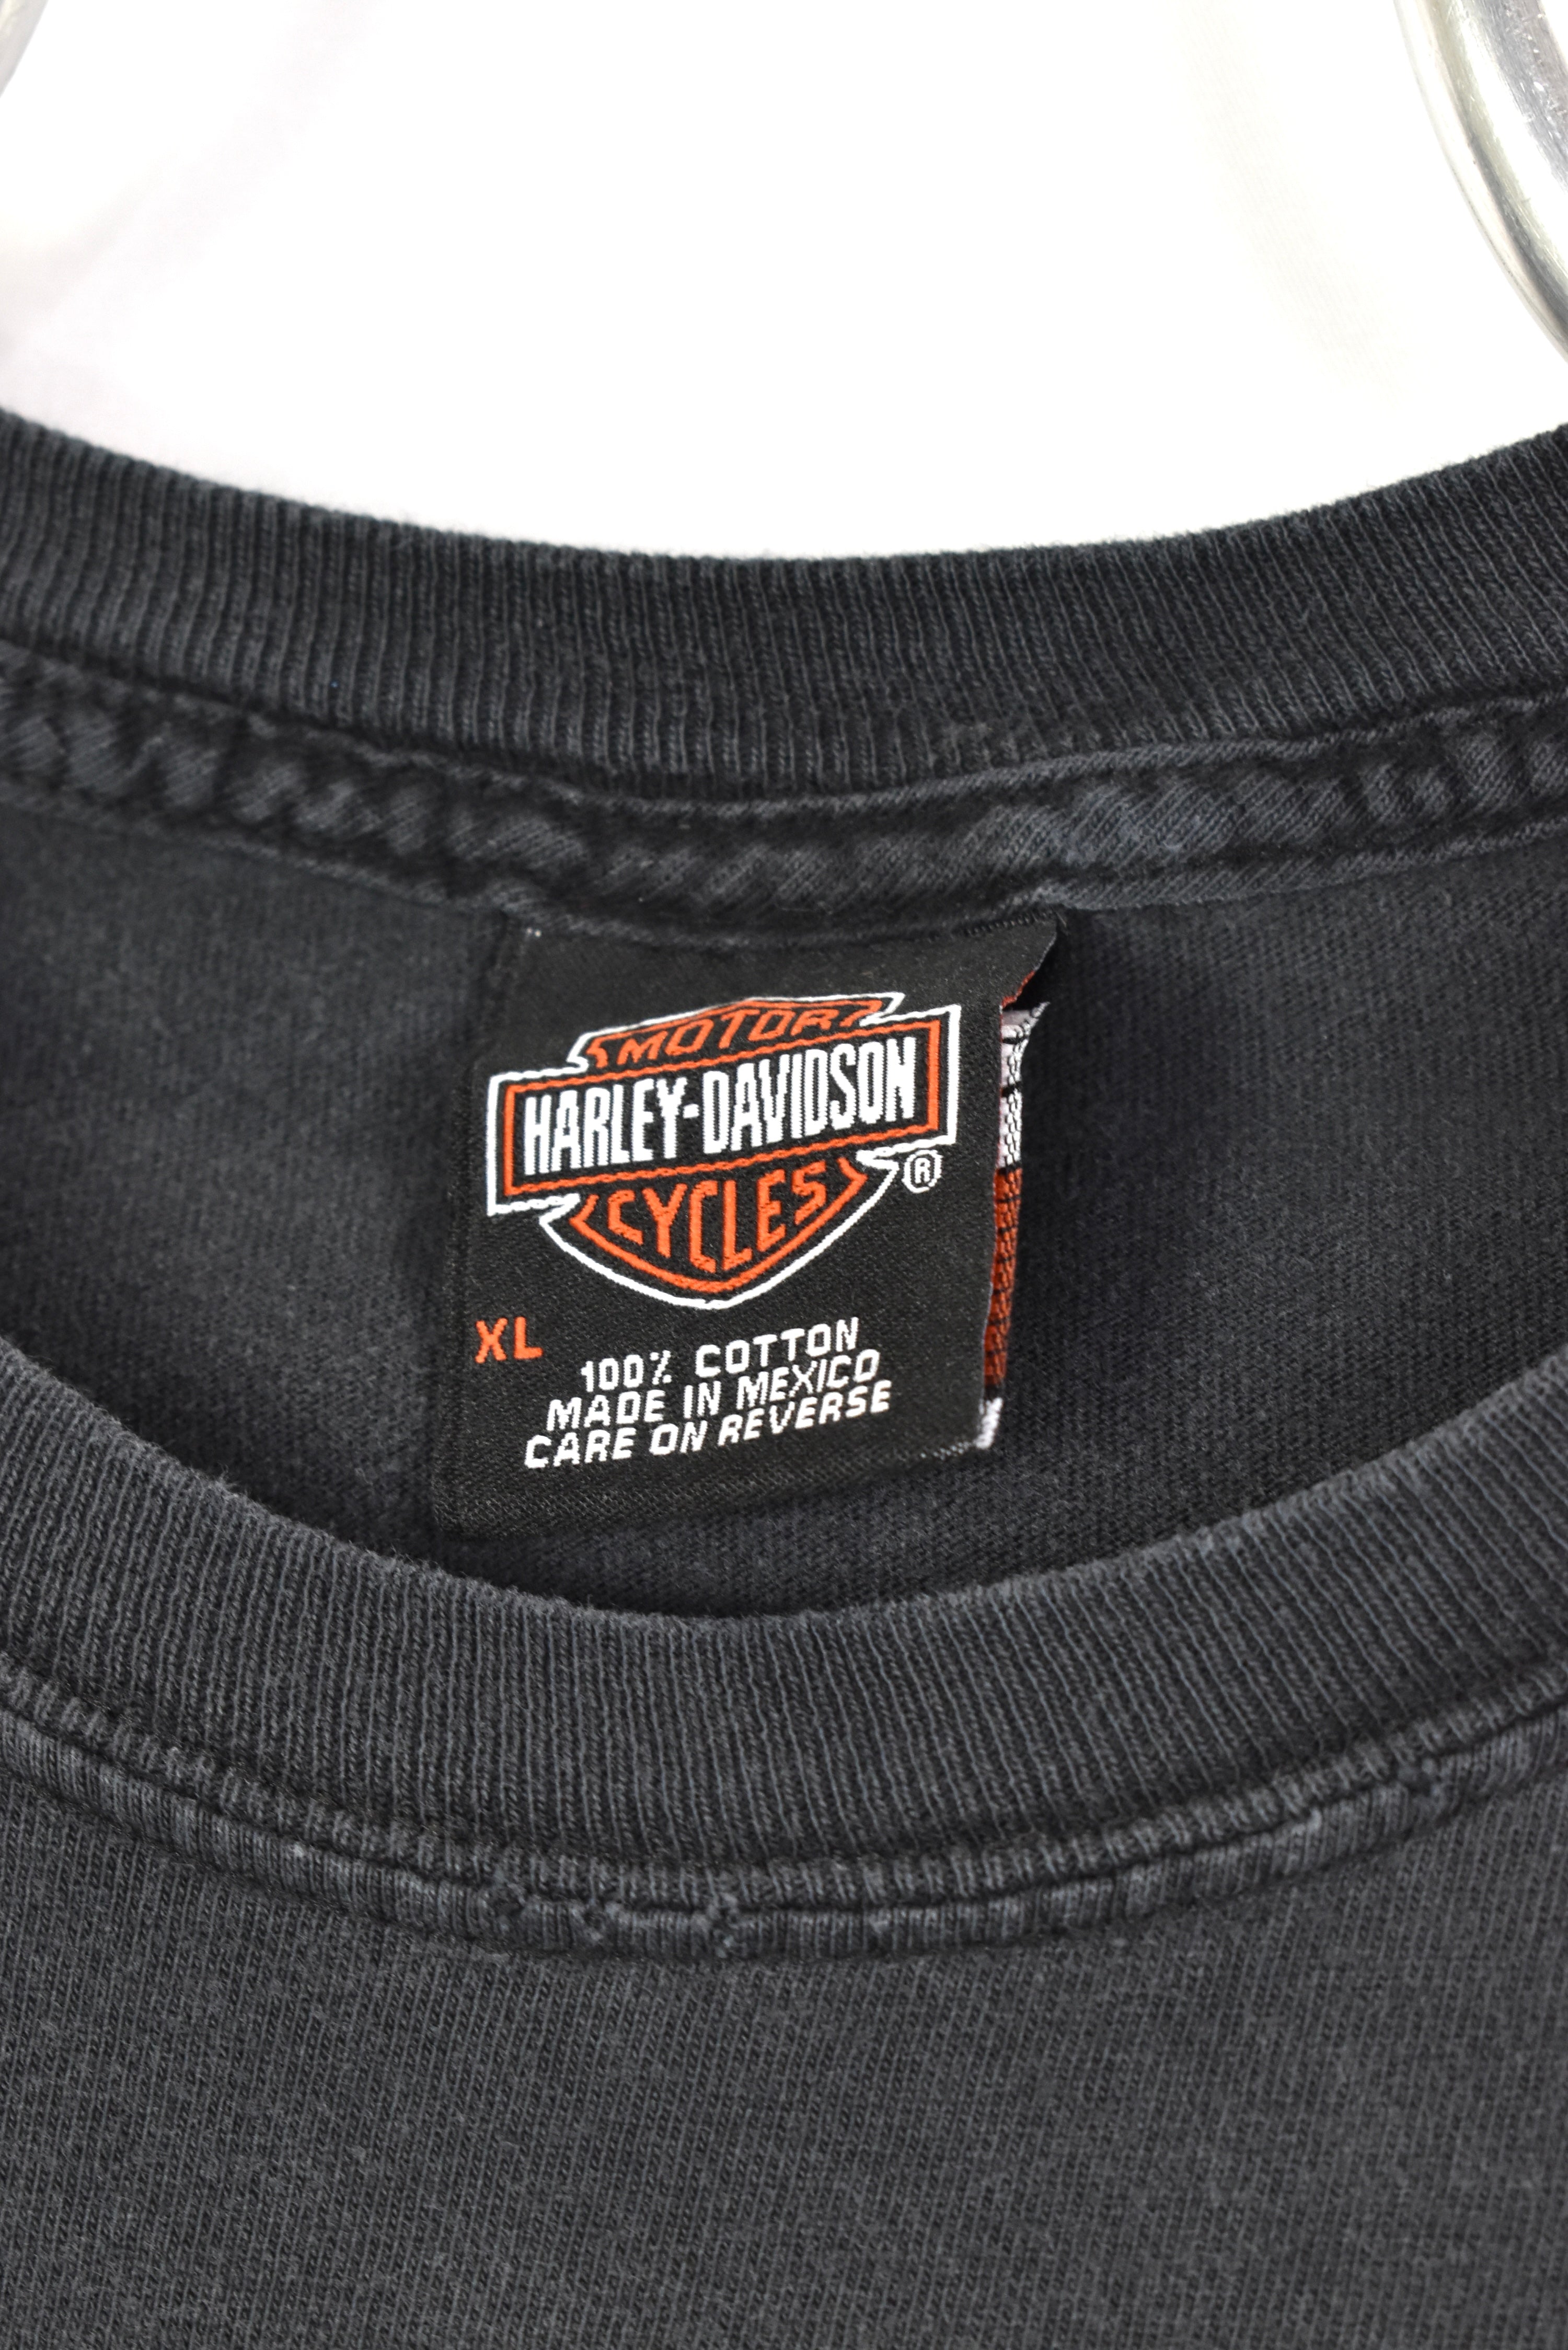 Vintage Harley Davidson shirt, 2002 black graphic tee - AU L HARLEY DAVIDSON